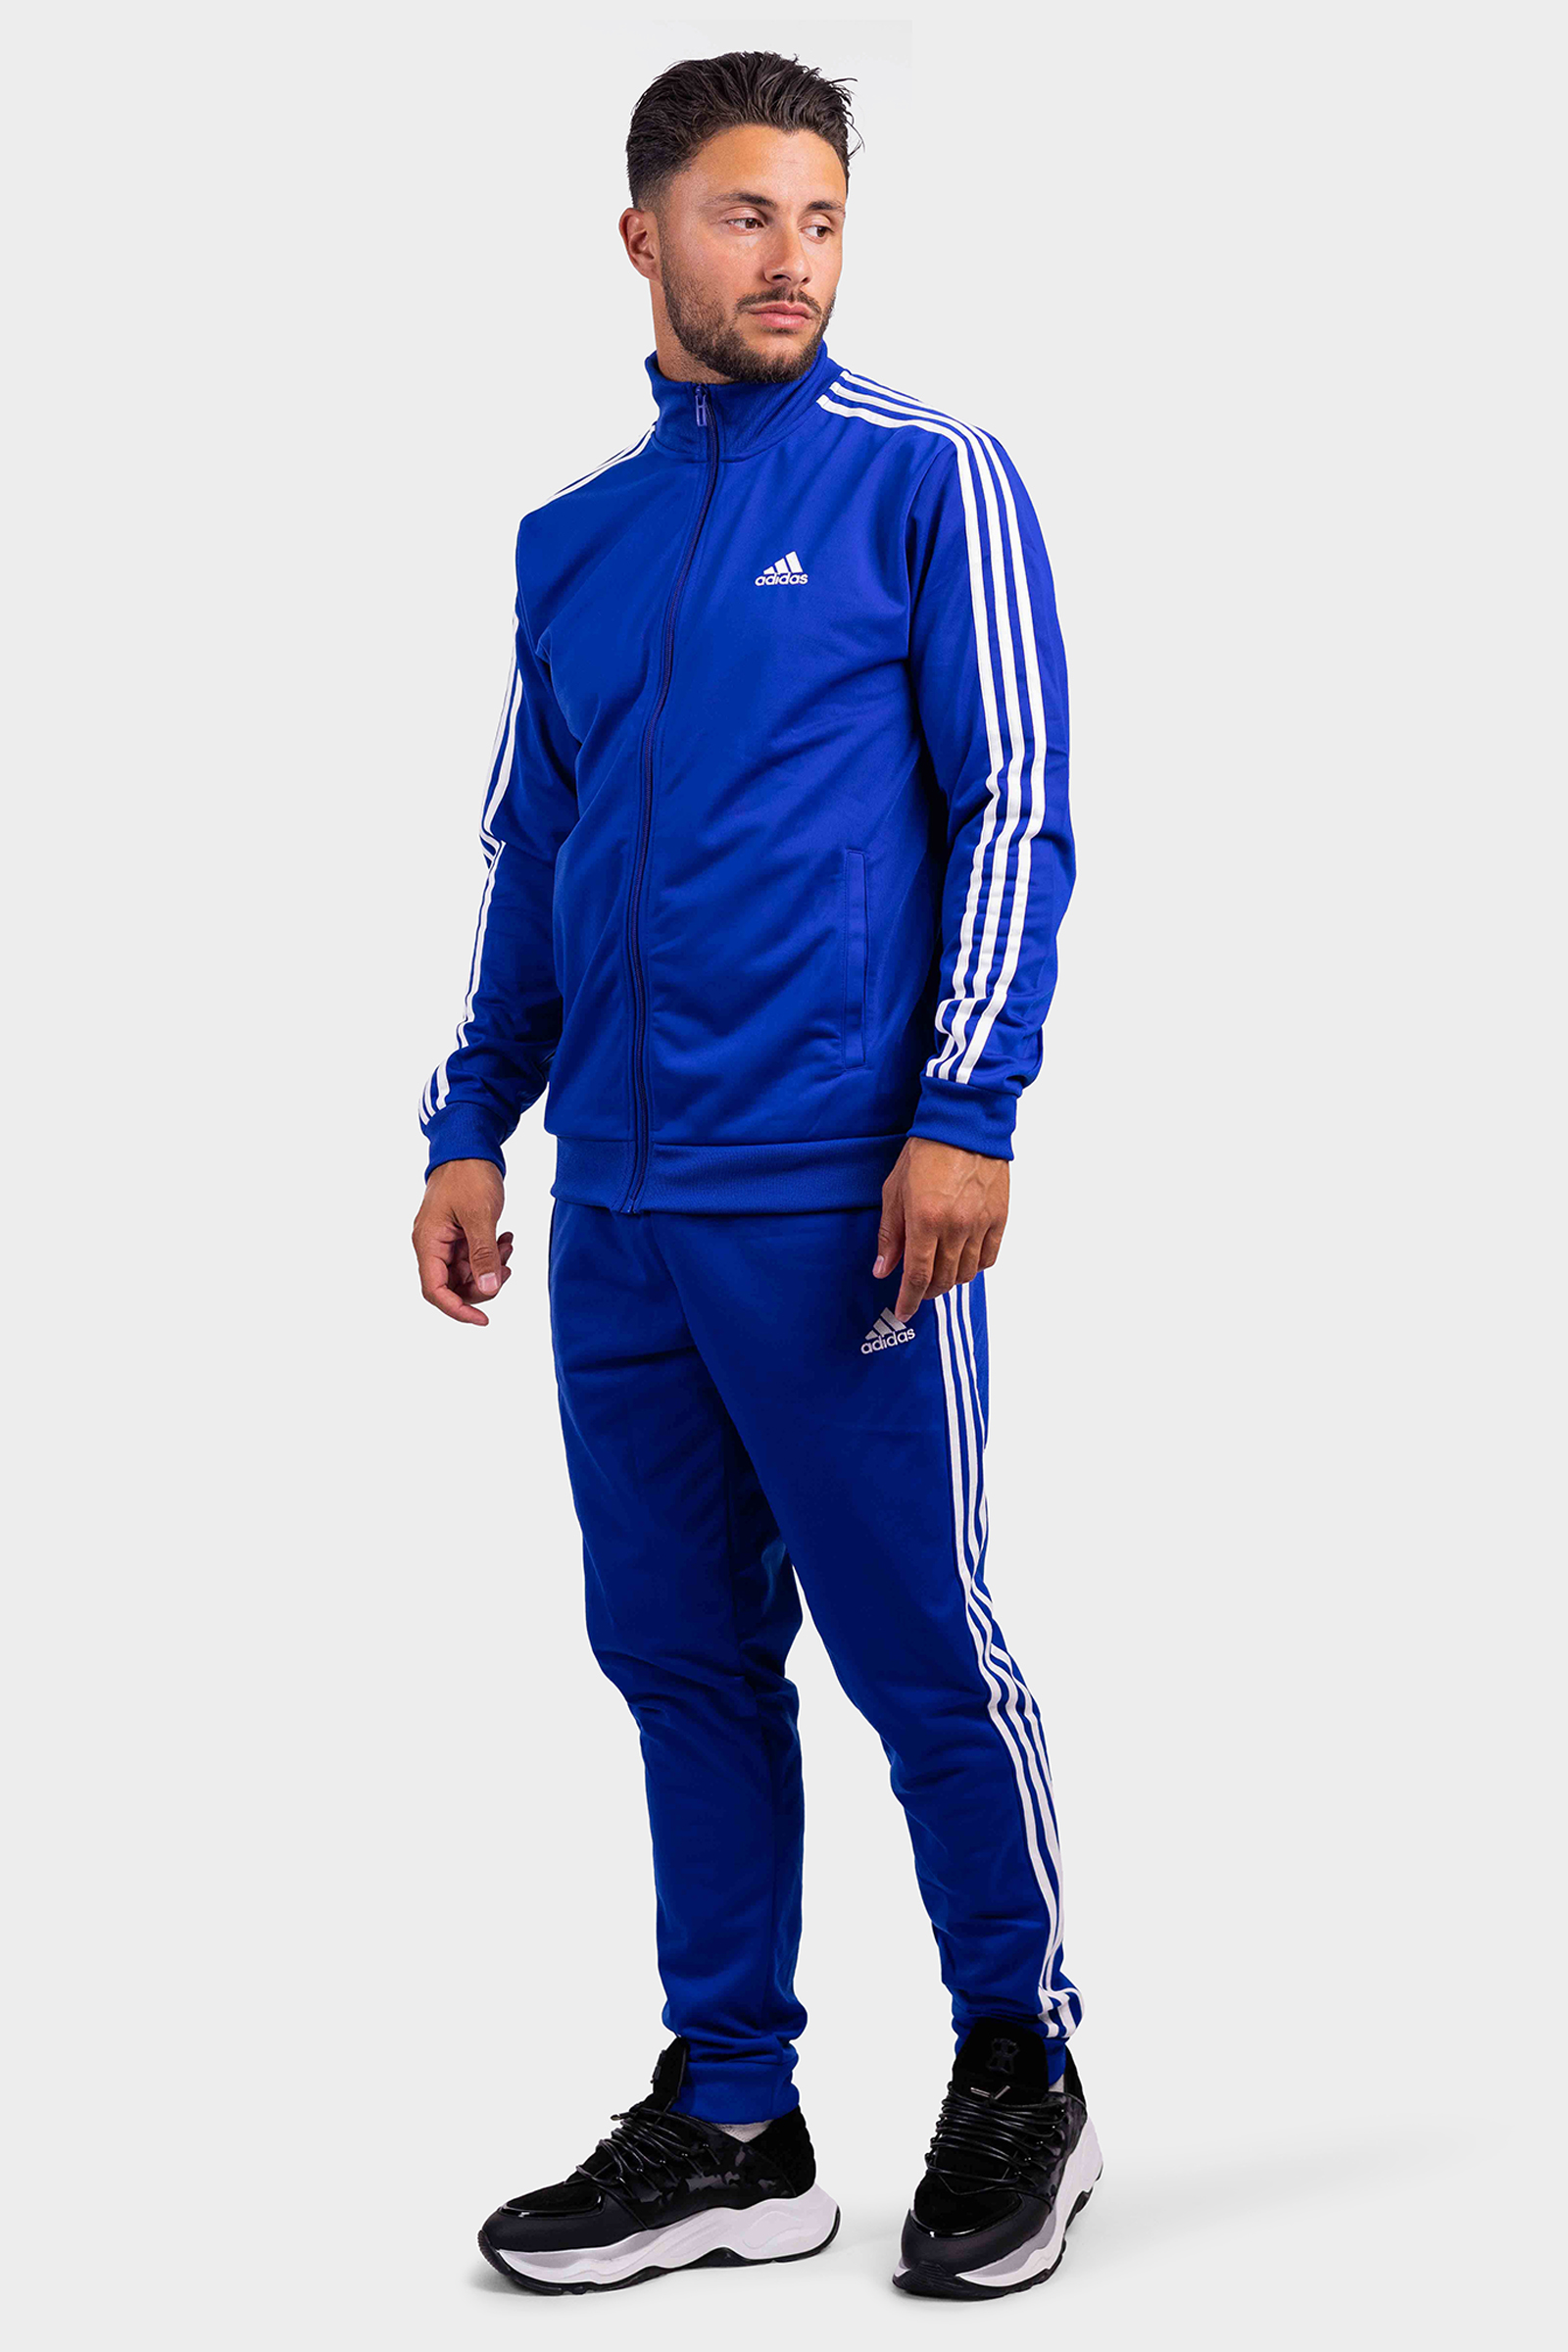 Bad Almachtig voertuig Adidas Basic 3 Stripes Trainingspak Heren Blauw/Wit Heren shoppen? |  Soccerfanshop BE